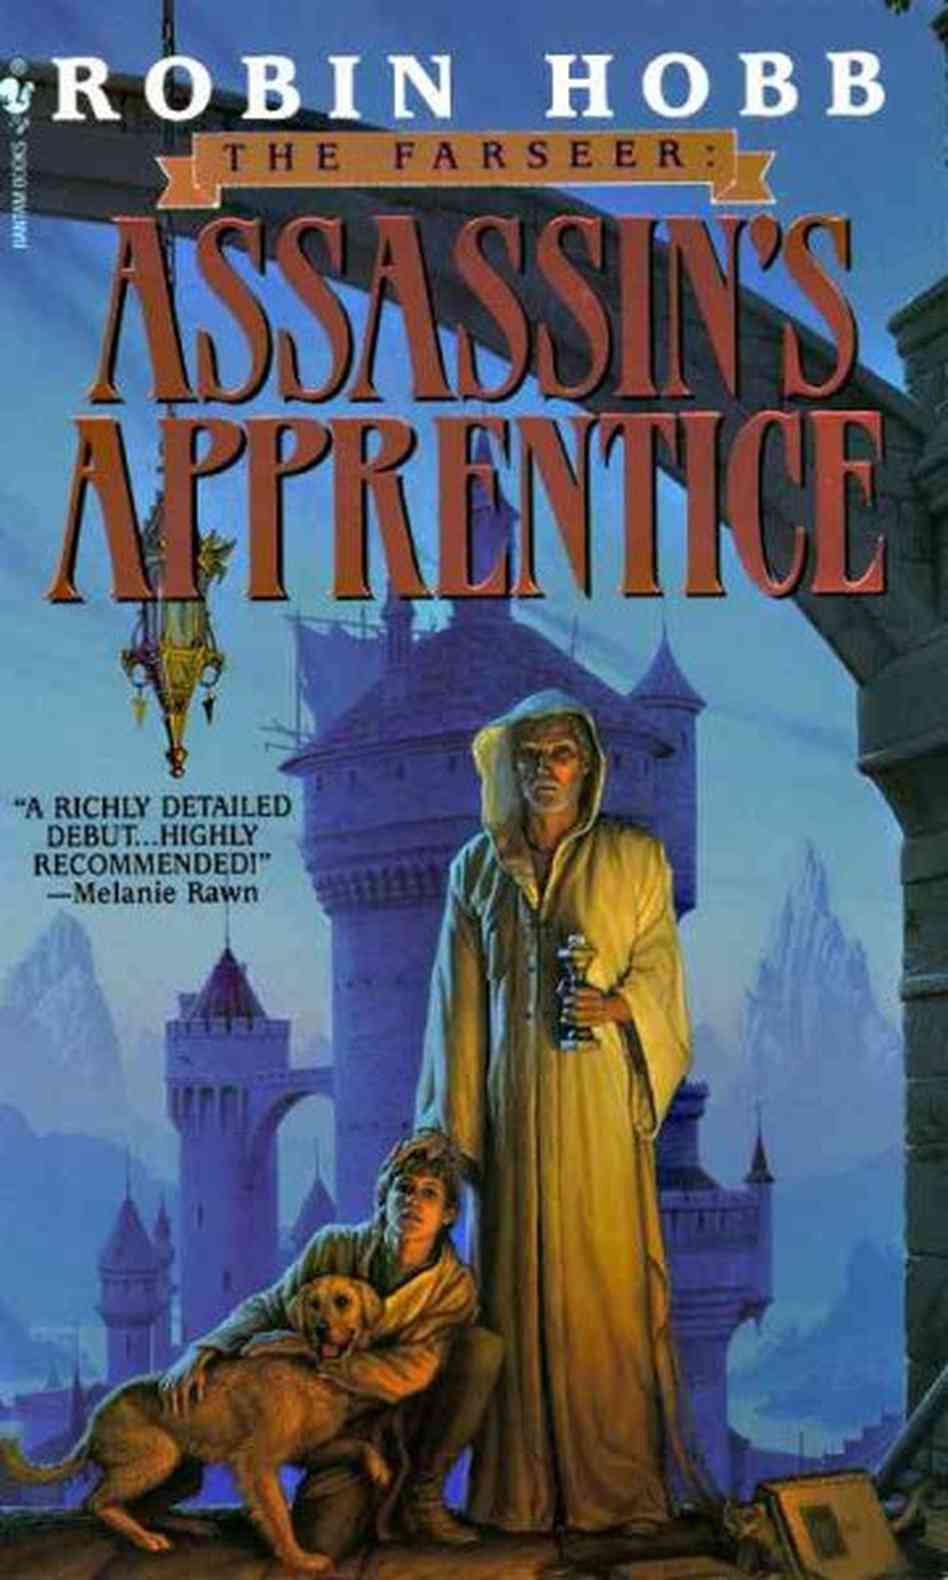 Episode 8: ‘Assassin’s Apprentice’ by Robin Hobb